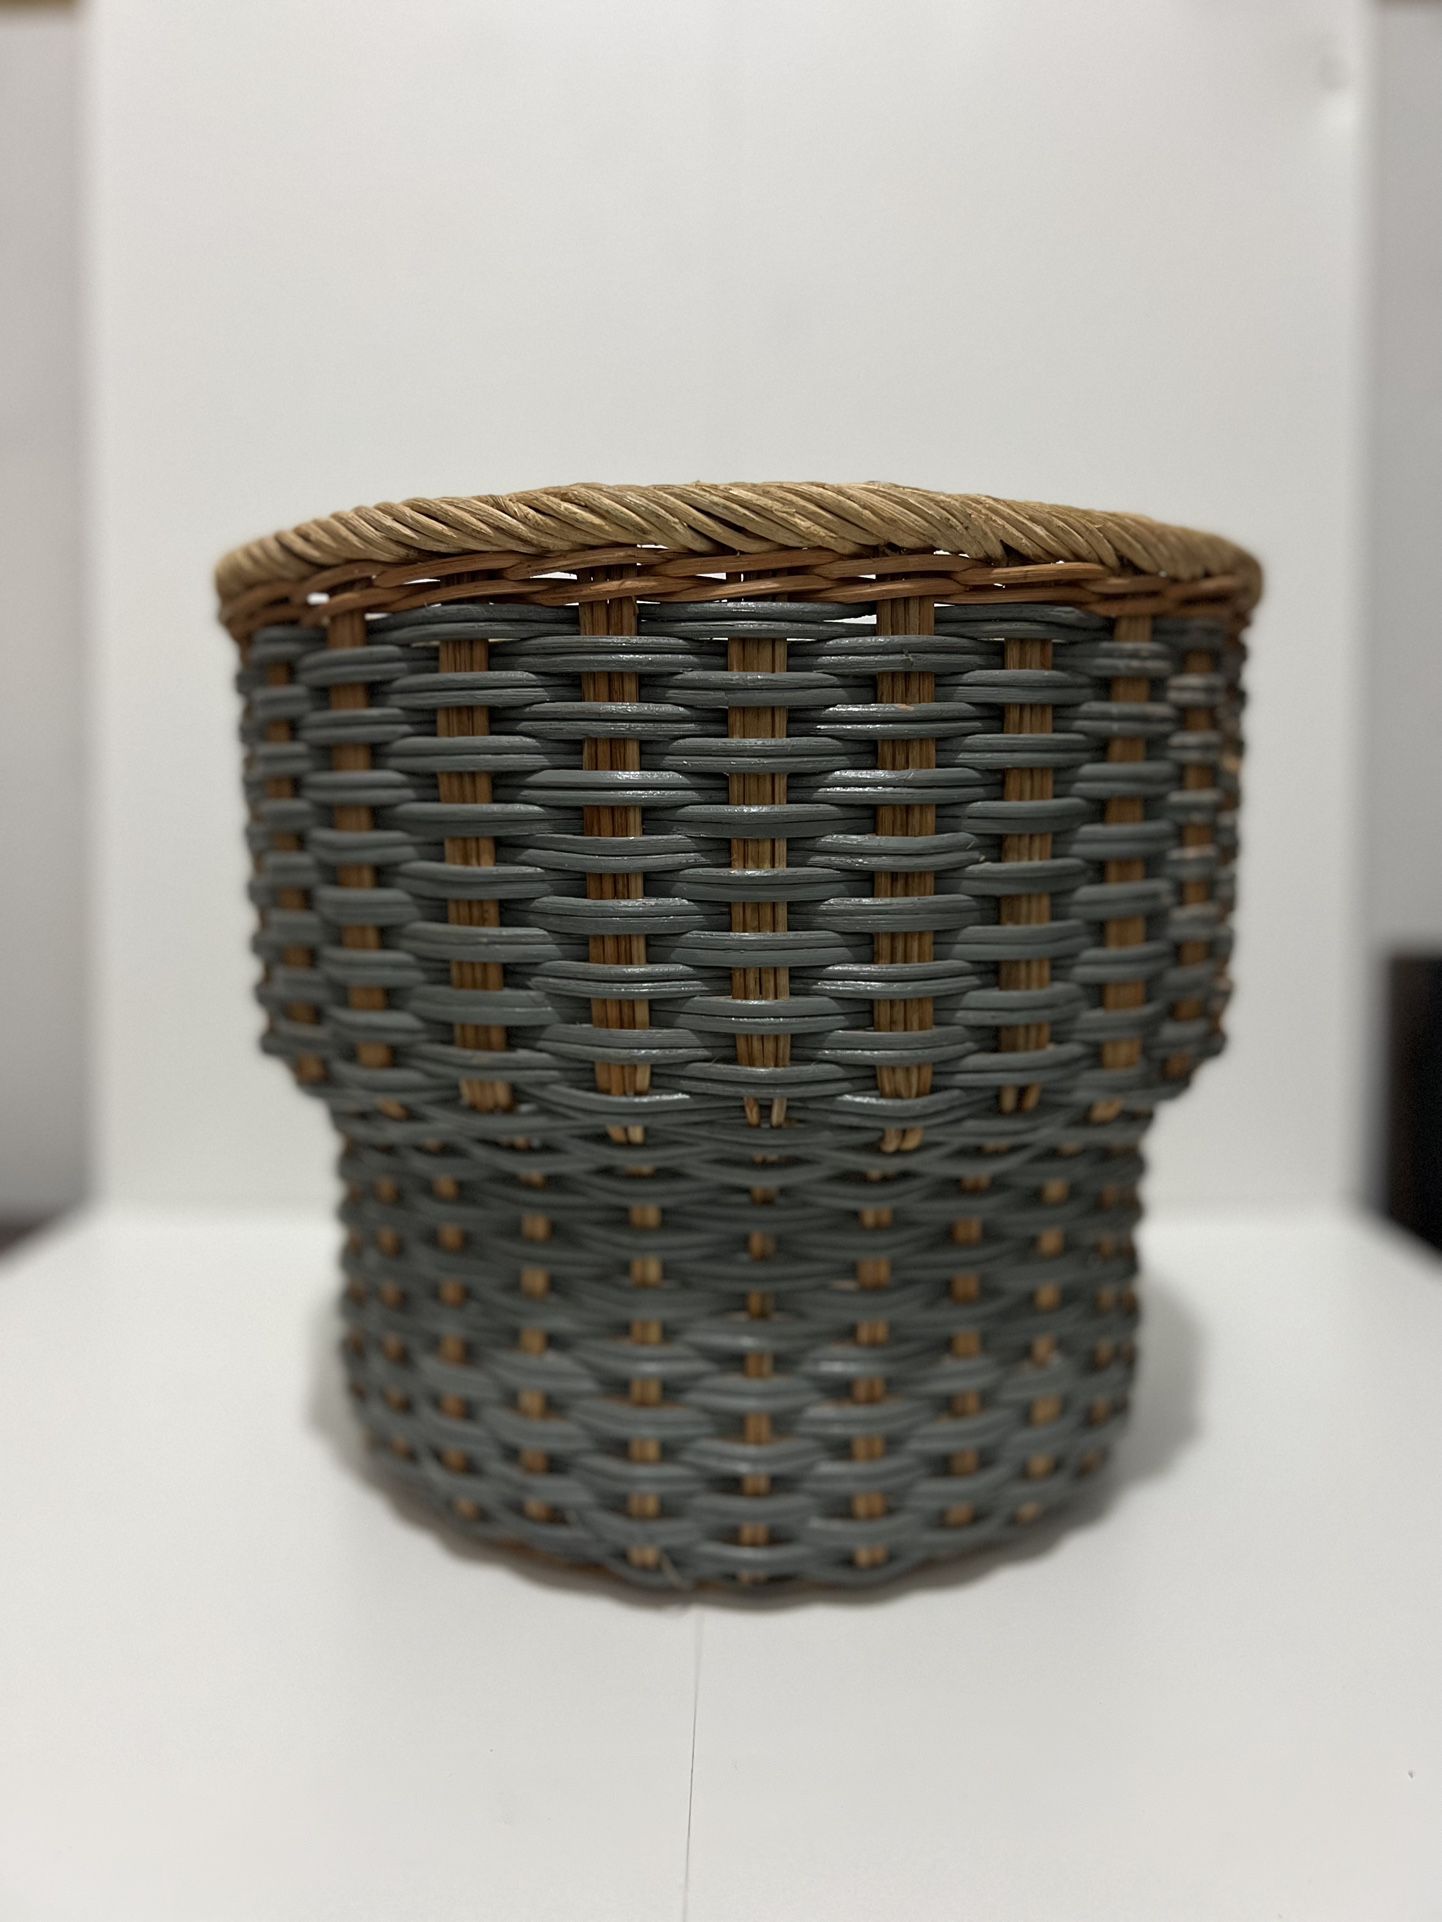 Wicker Planter/Basket